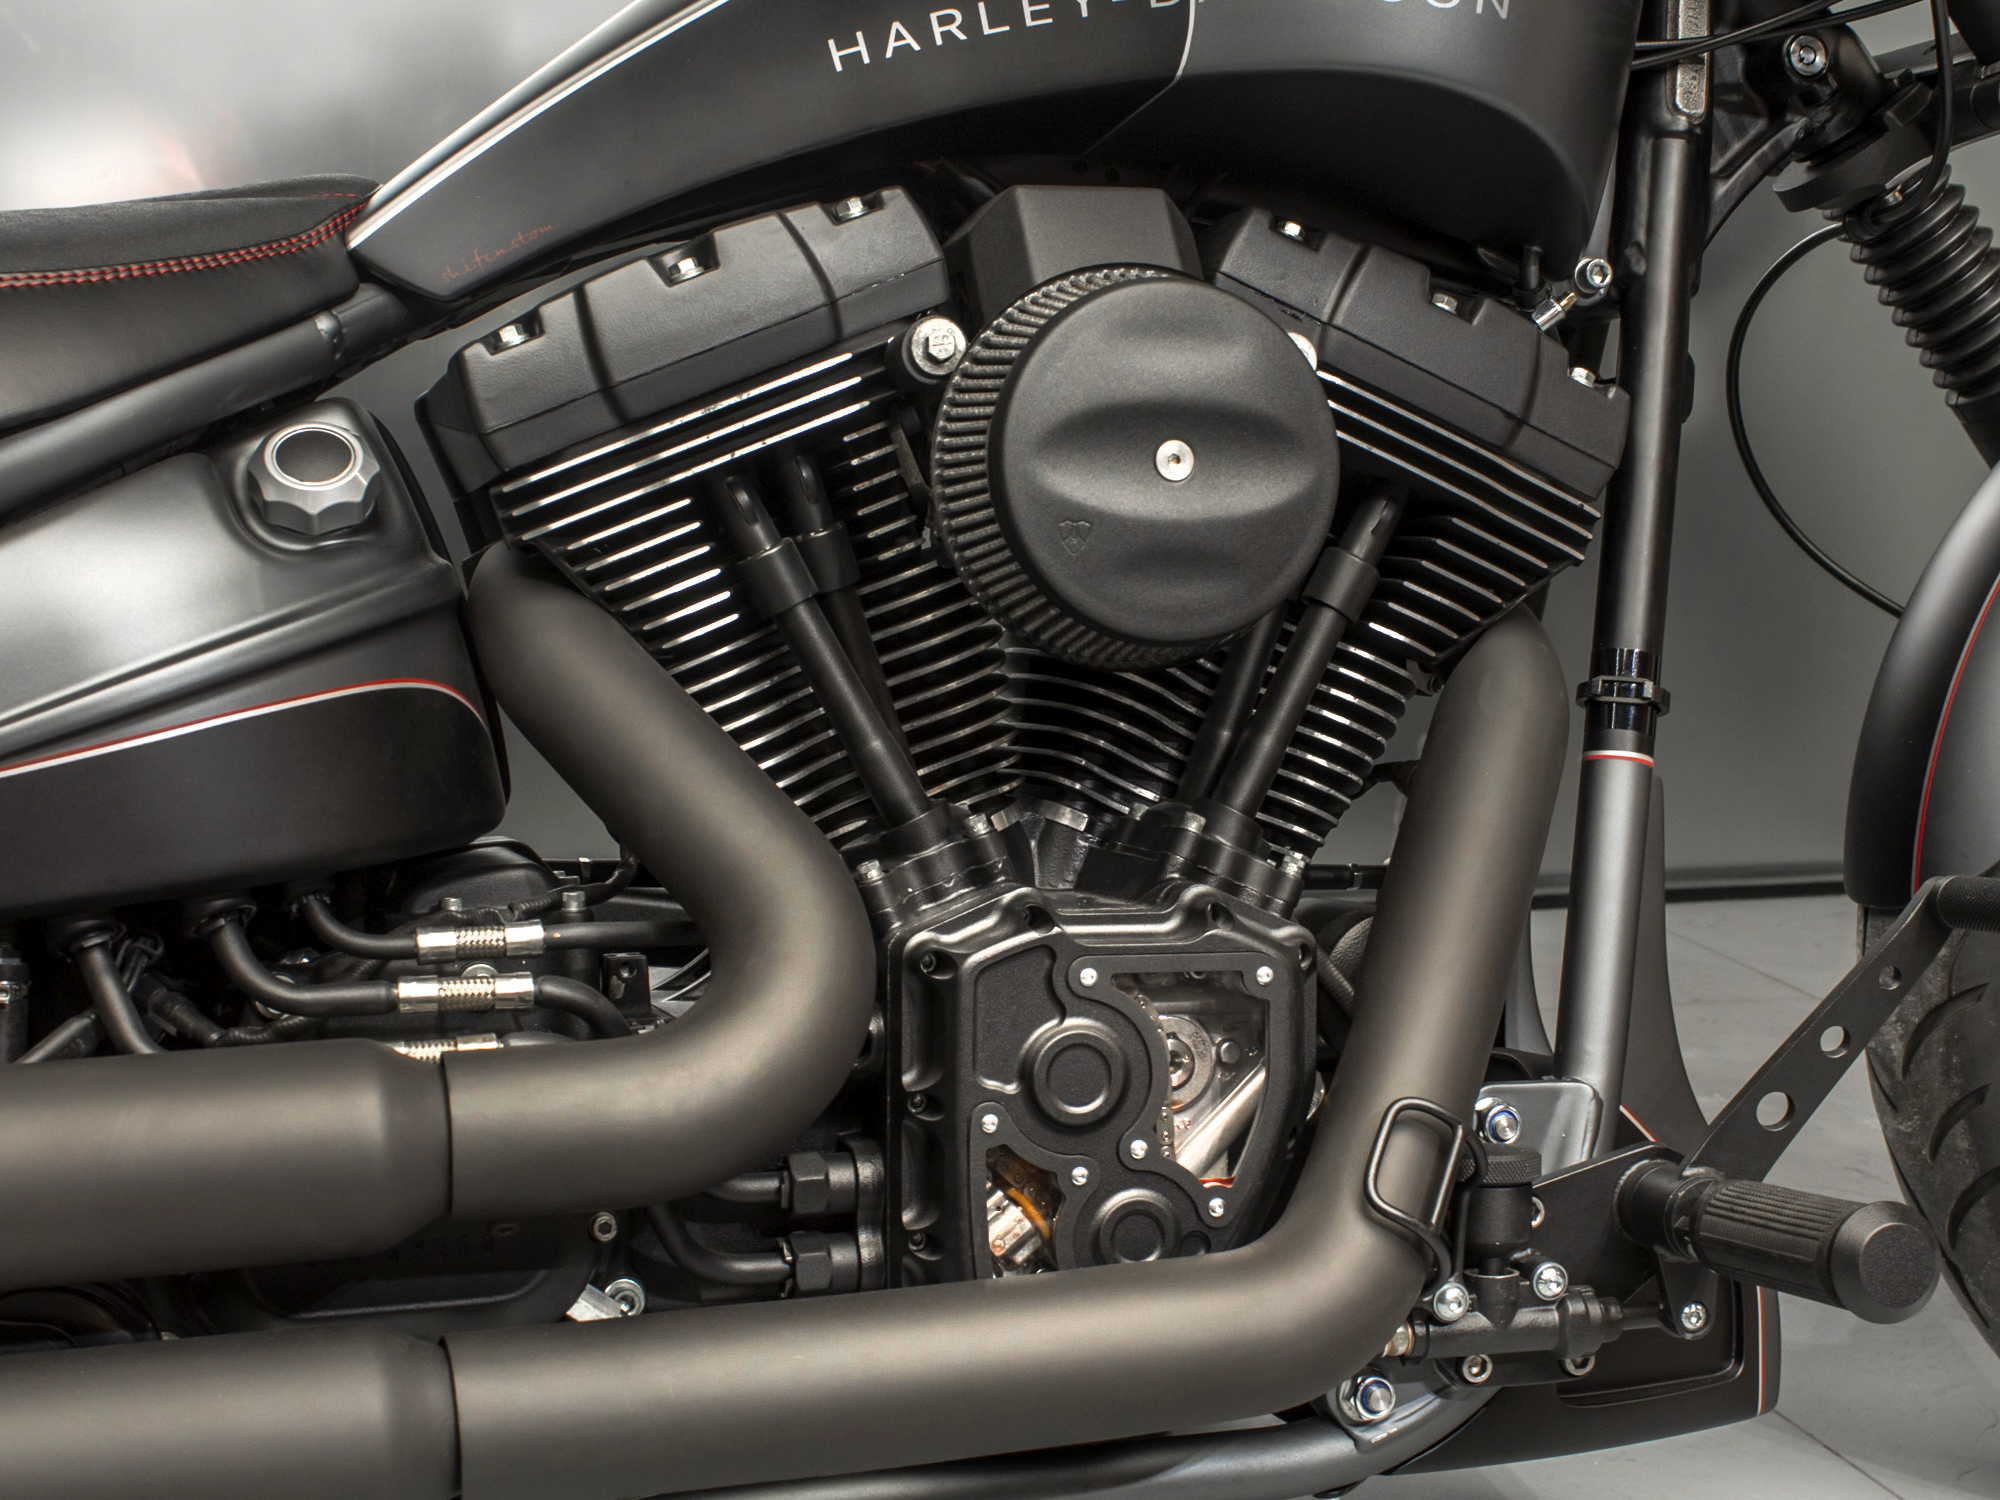 Harley-Davidson Breakout ShifCustom #6796